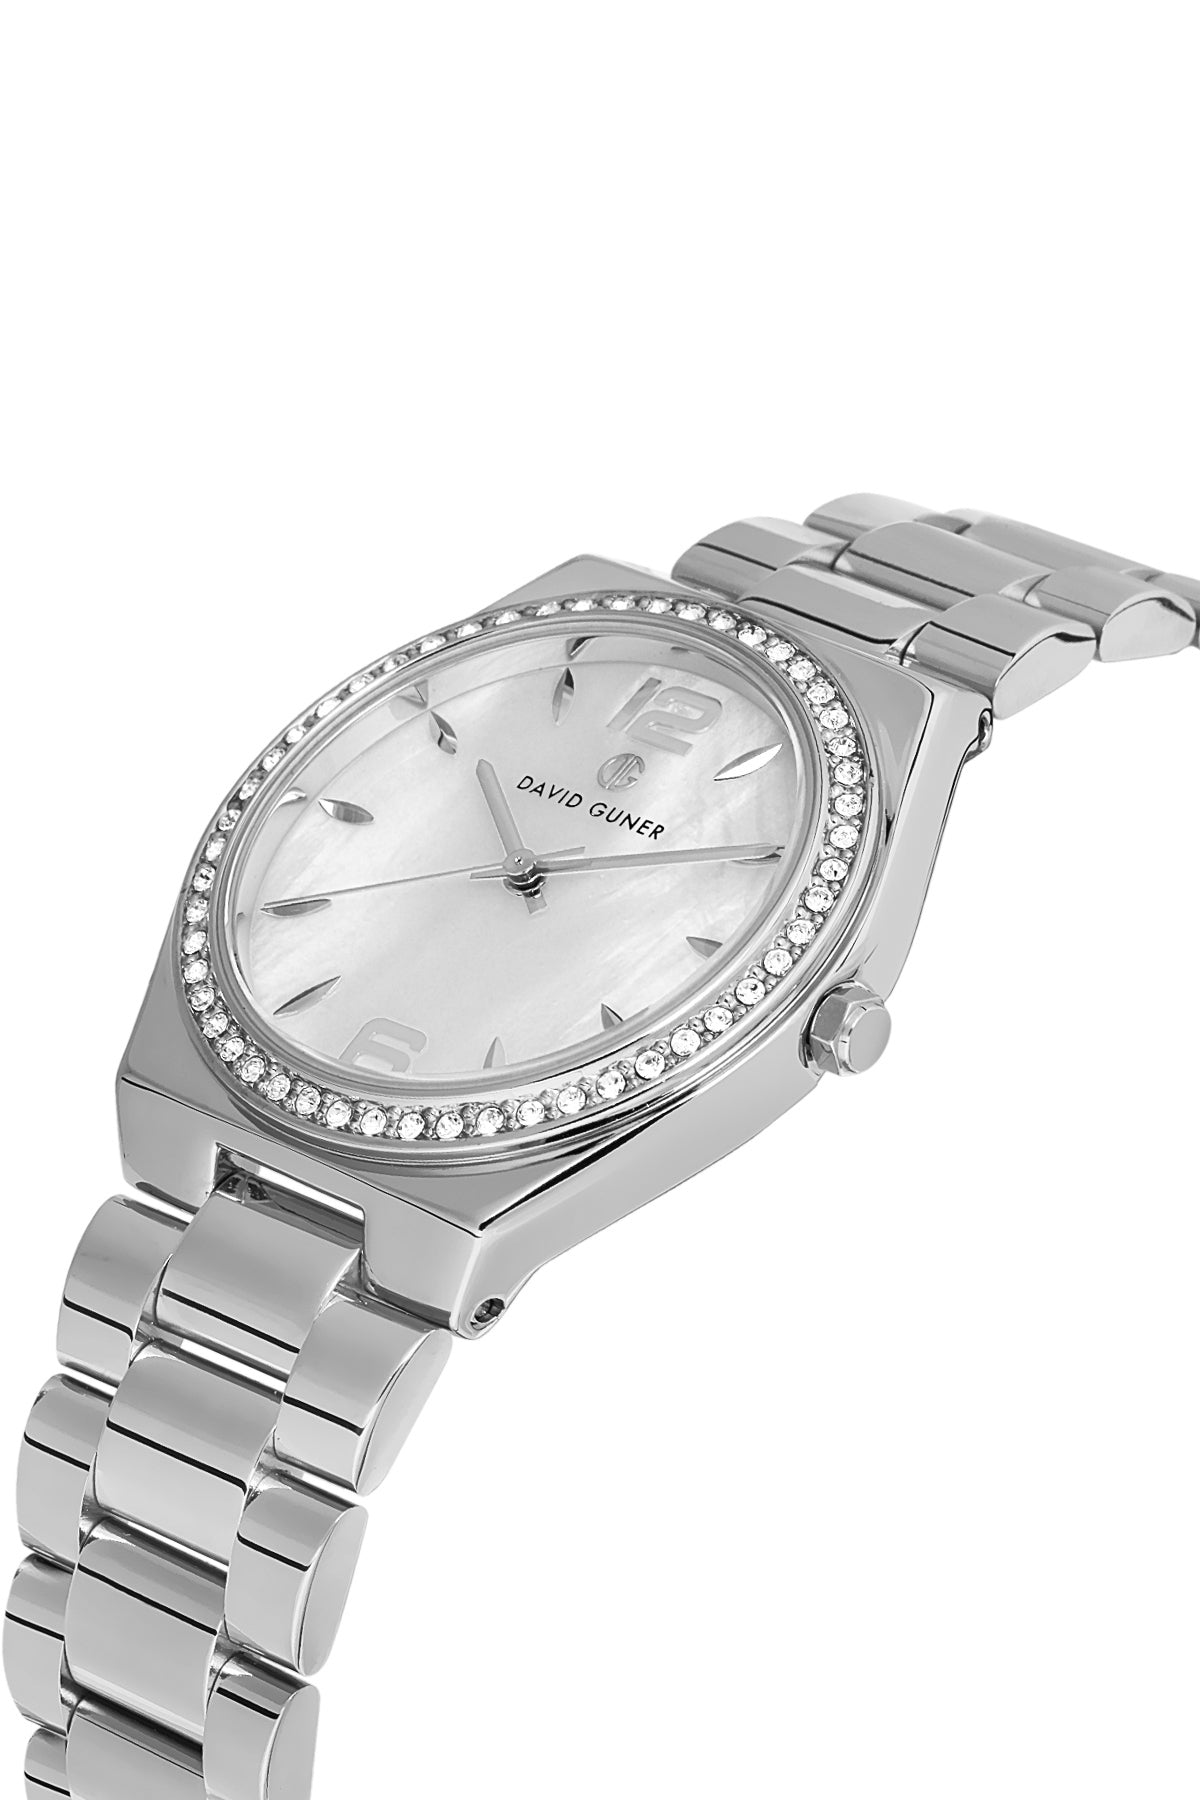 DAVID GUNER Silver Dial Stainless Steel Women's Wristwatch